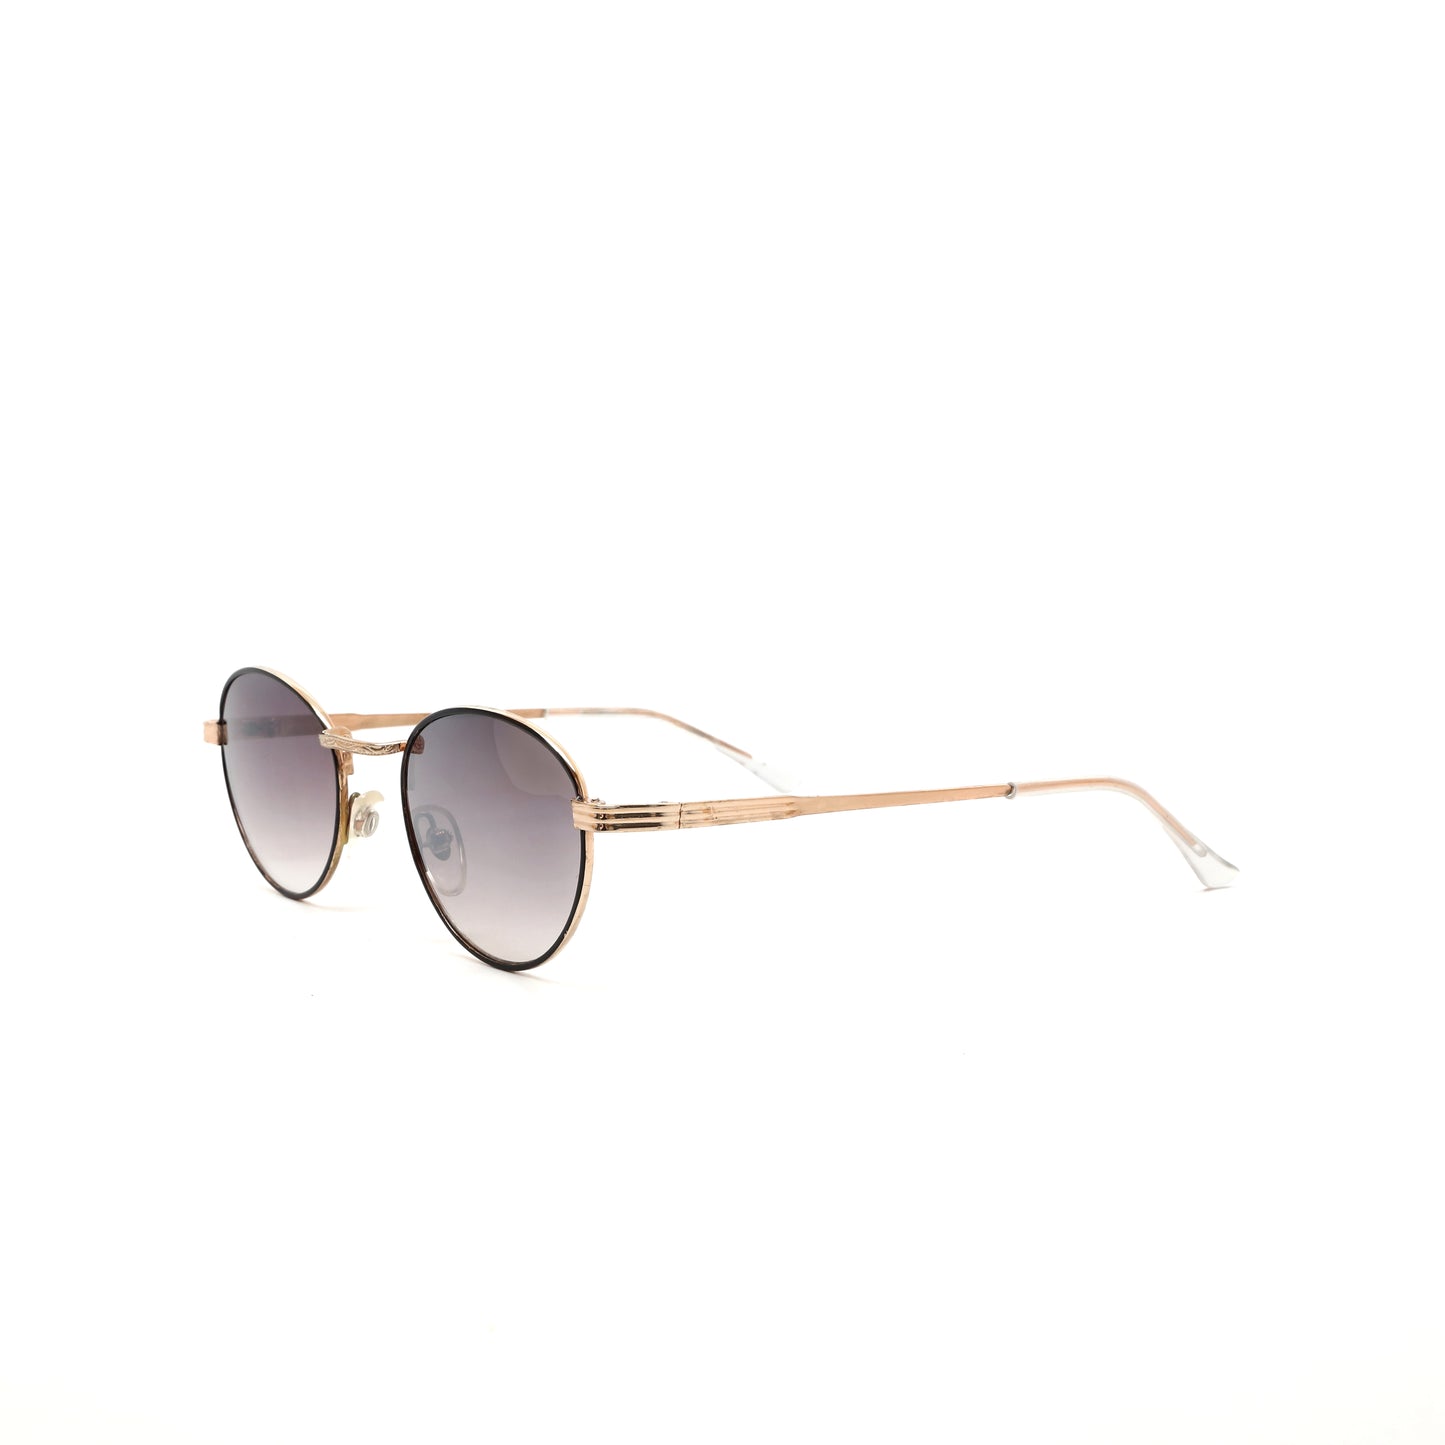 Vintage Standard Size Classic Circular Frame Deadstock Sunglasses - Light Grey